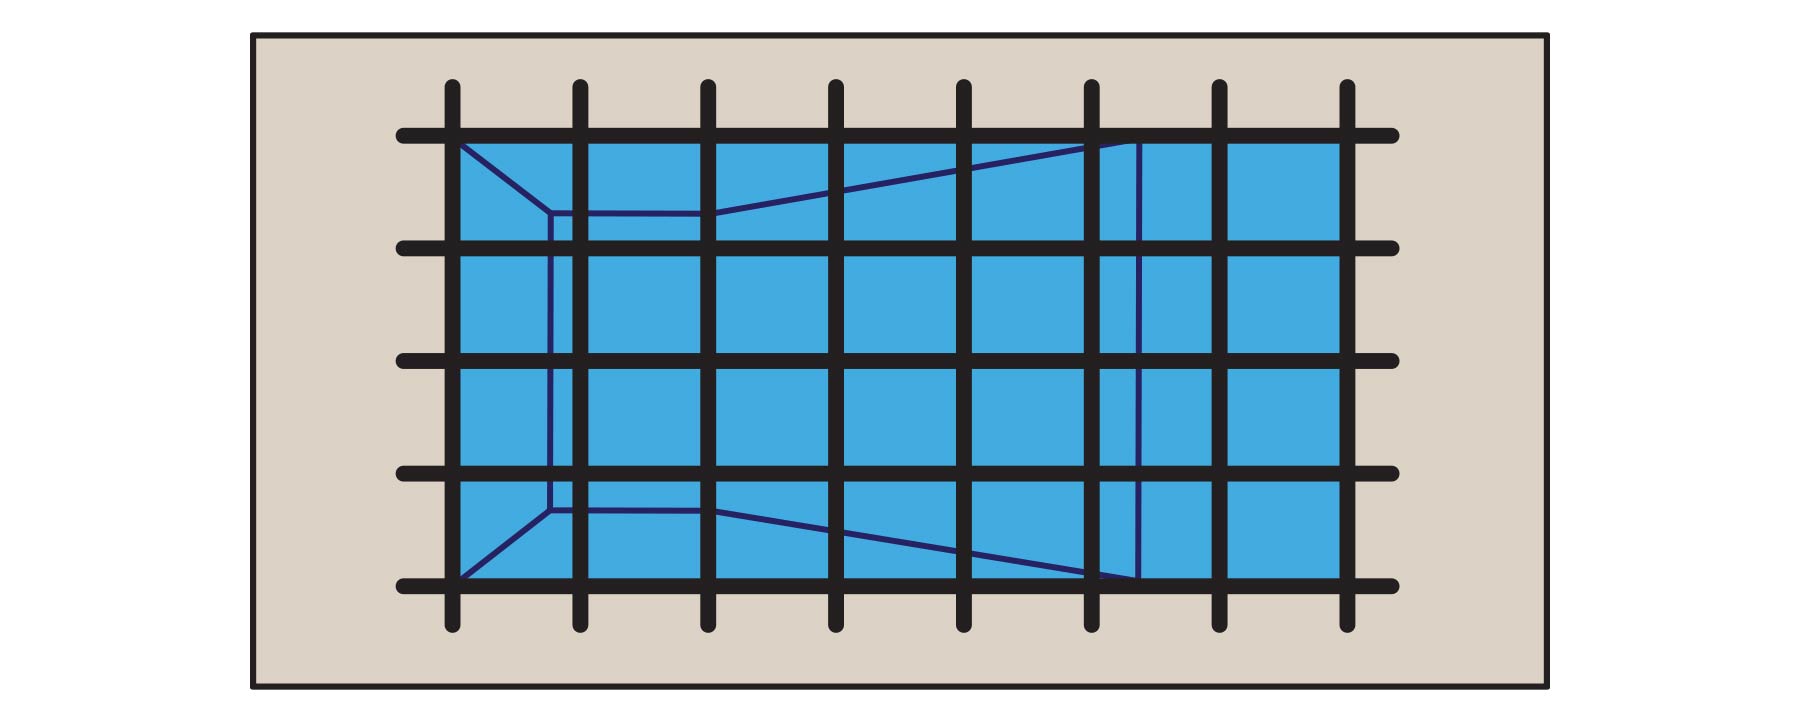 5x5 Grid